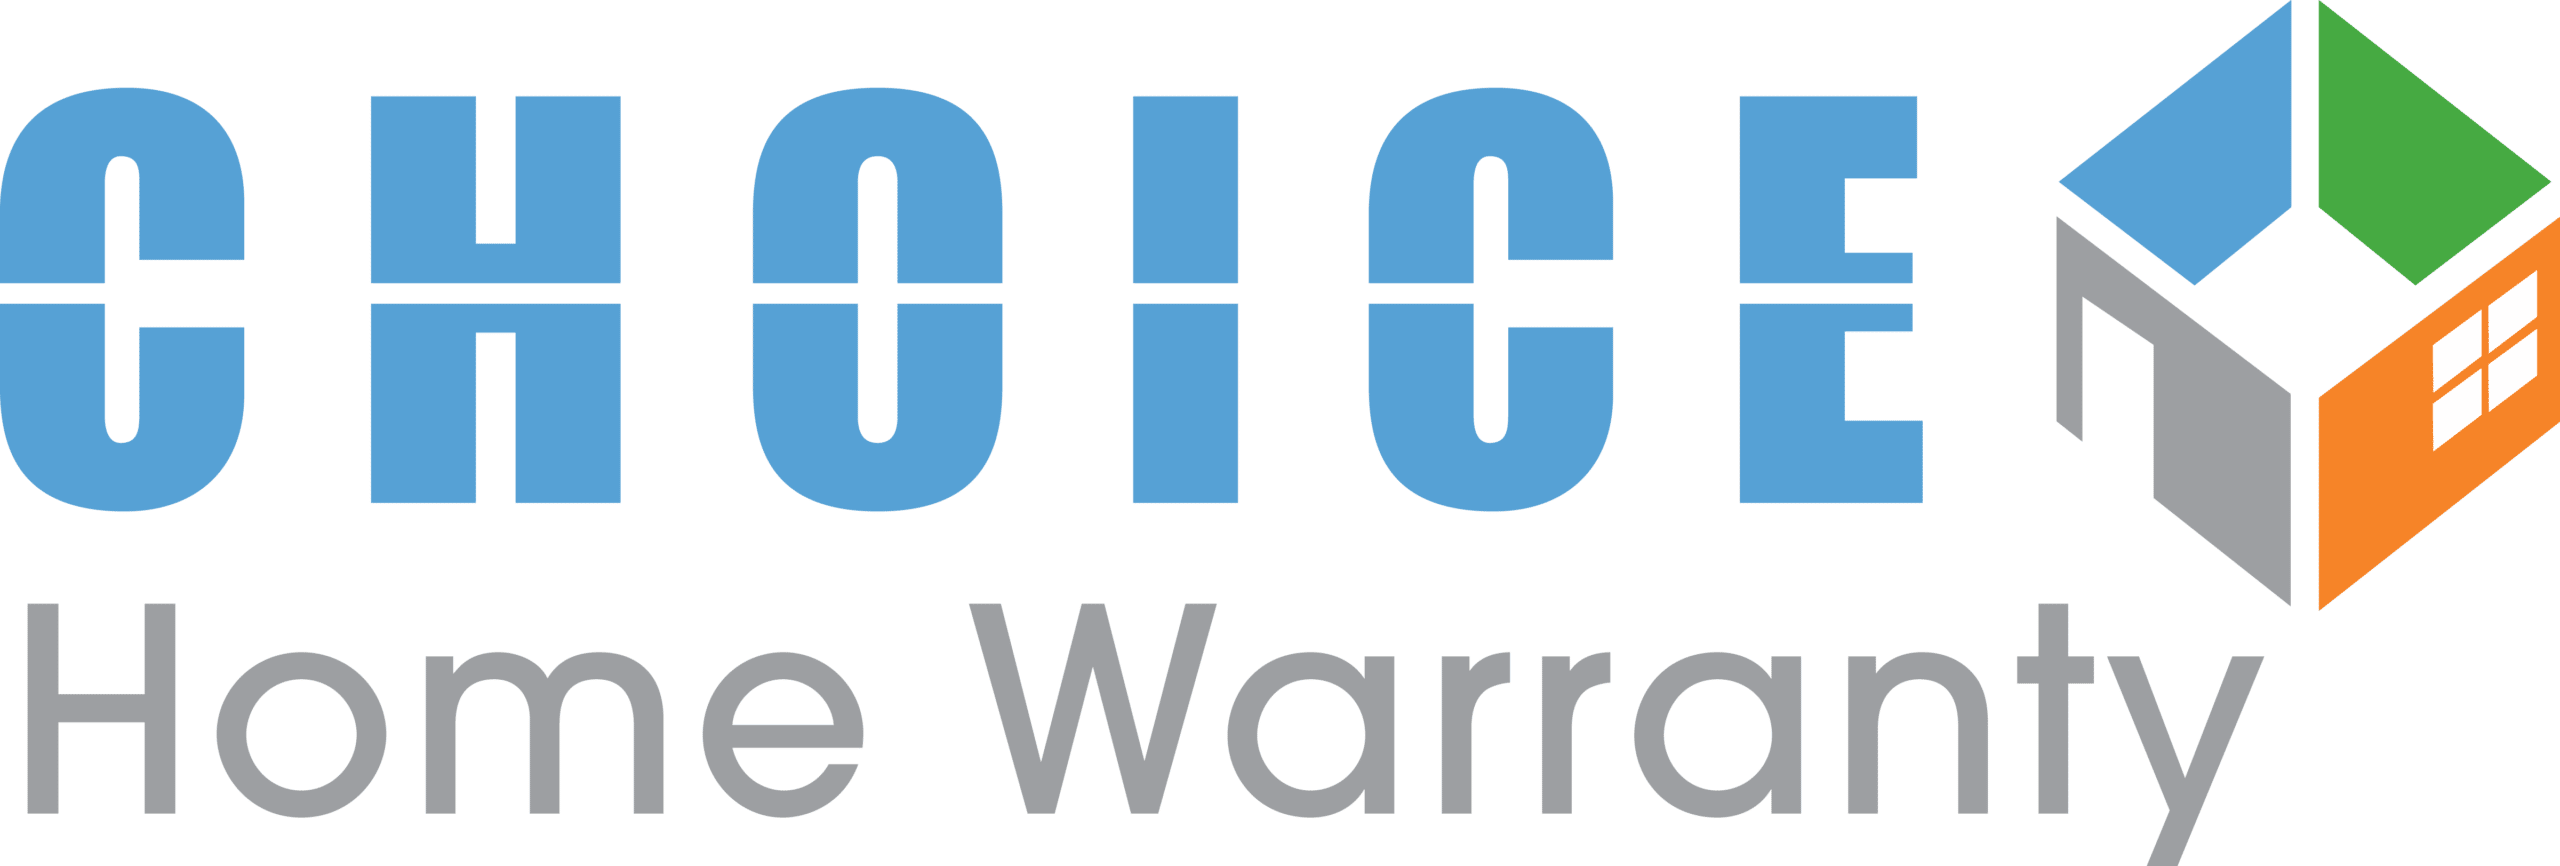 Choice Home Warranty logo